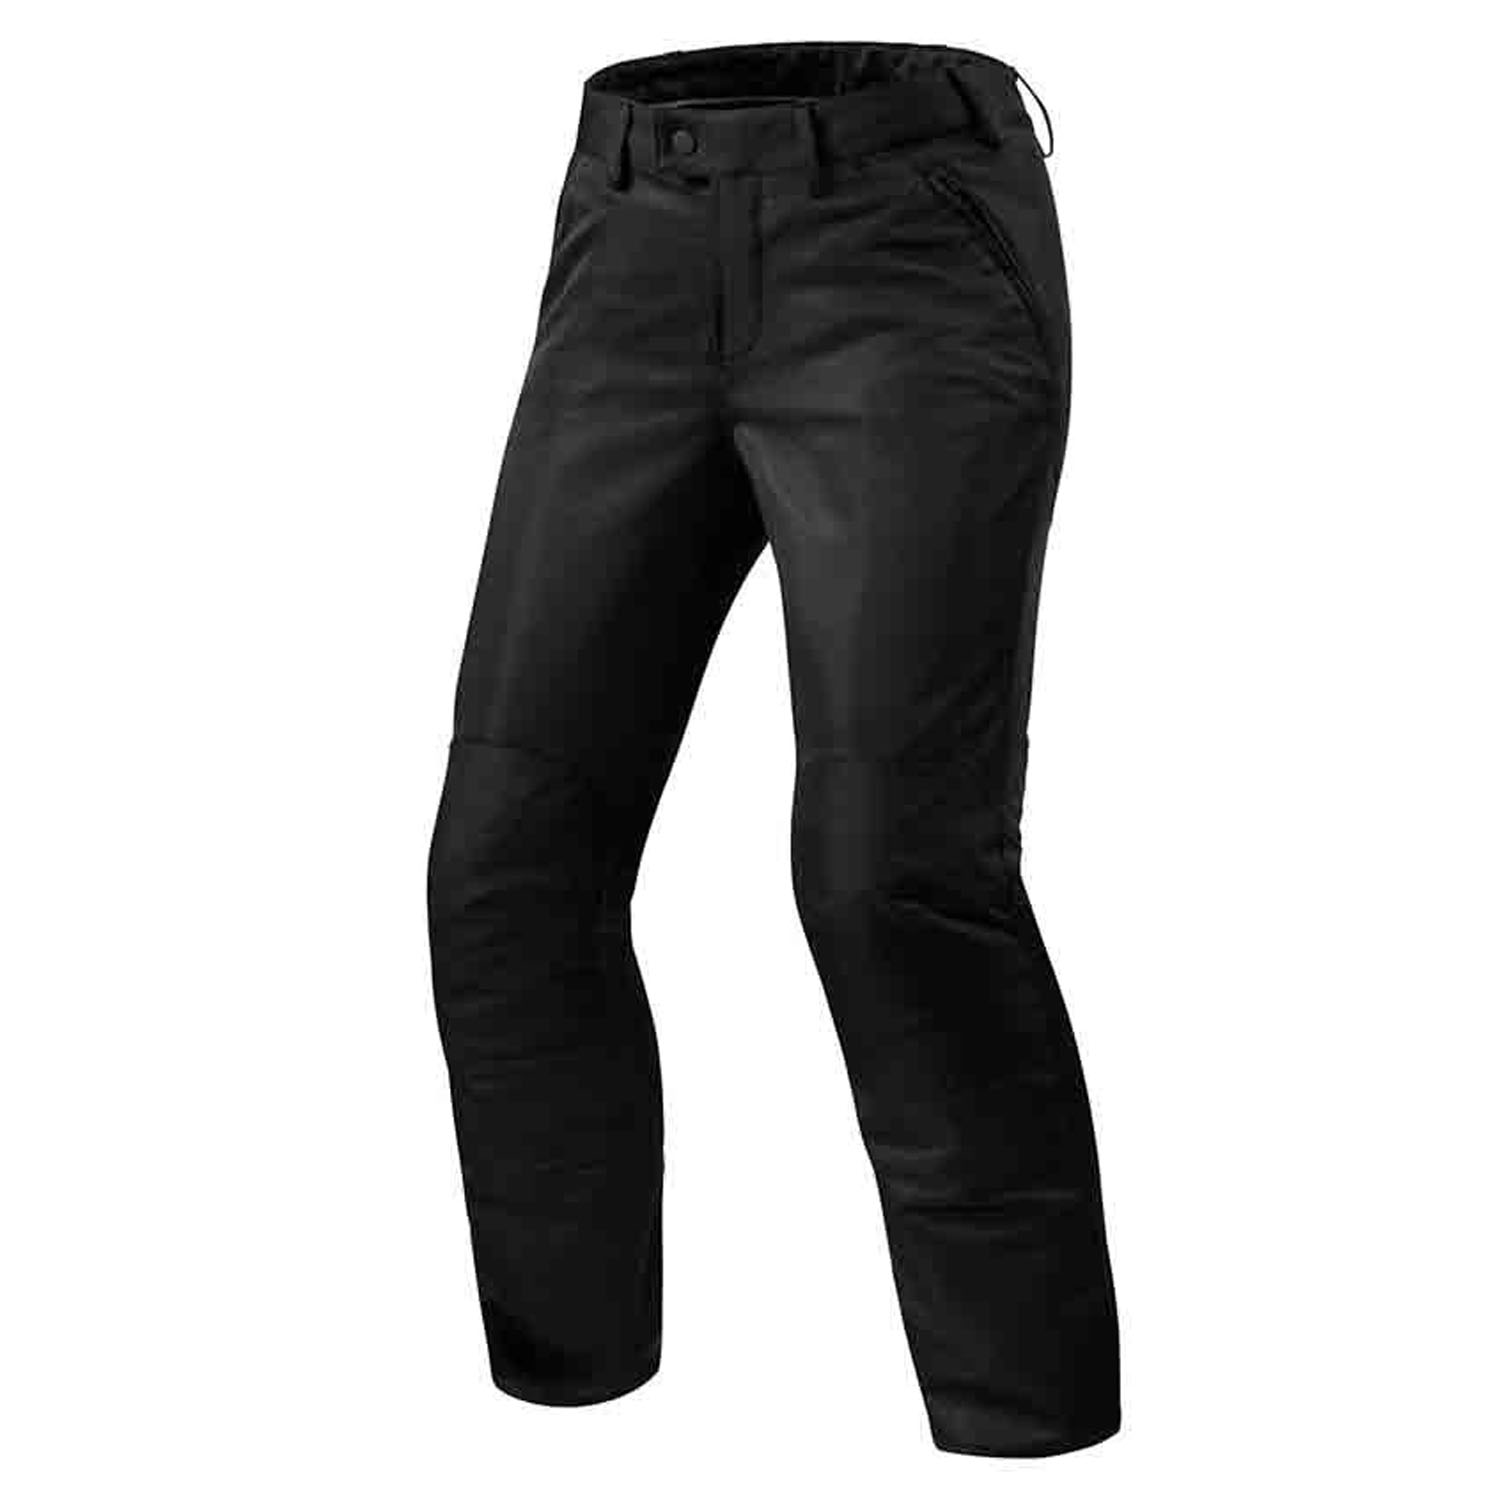 Image of REV'IT! Eclipse 2 Ladies Black Long Motorcycle Pants Size 42 EN